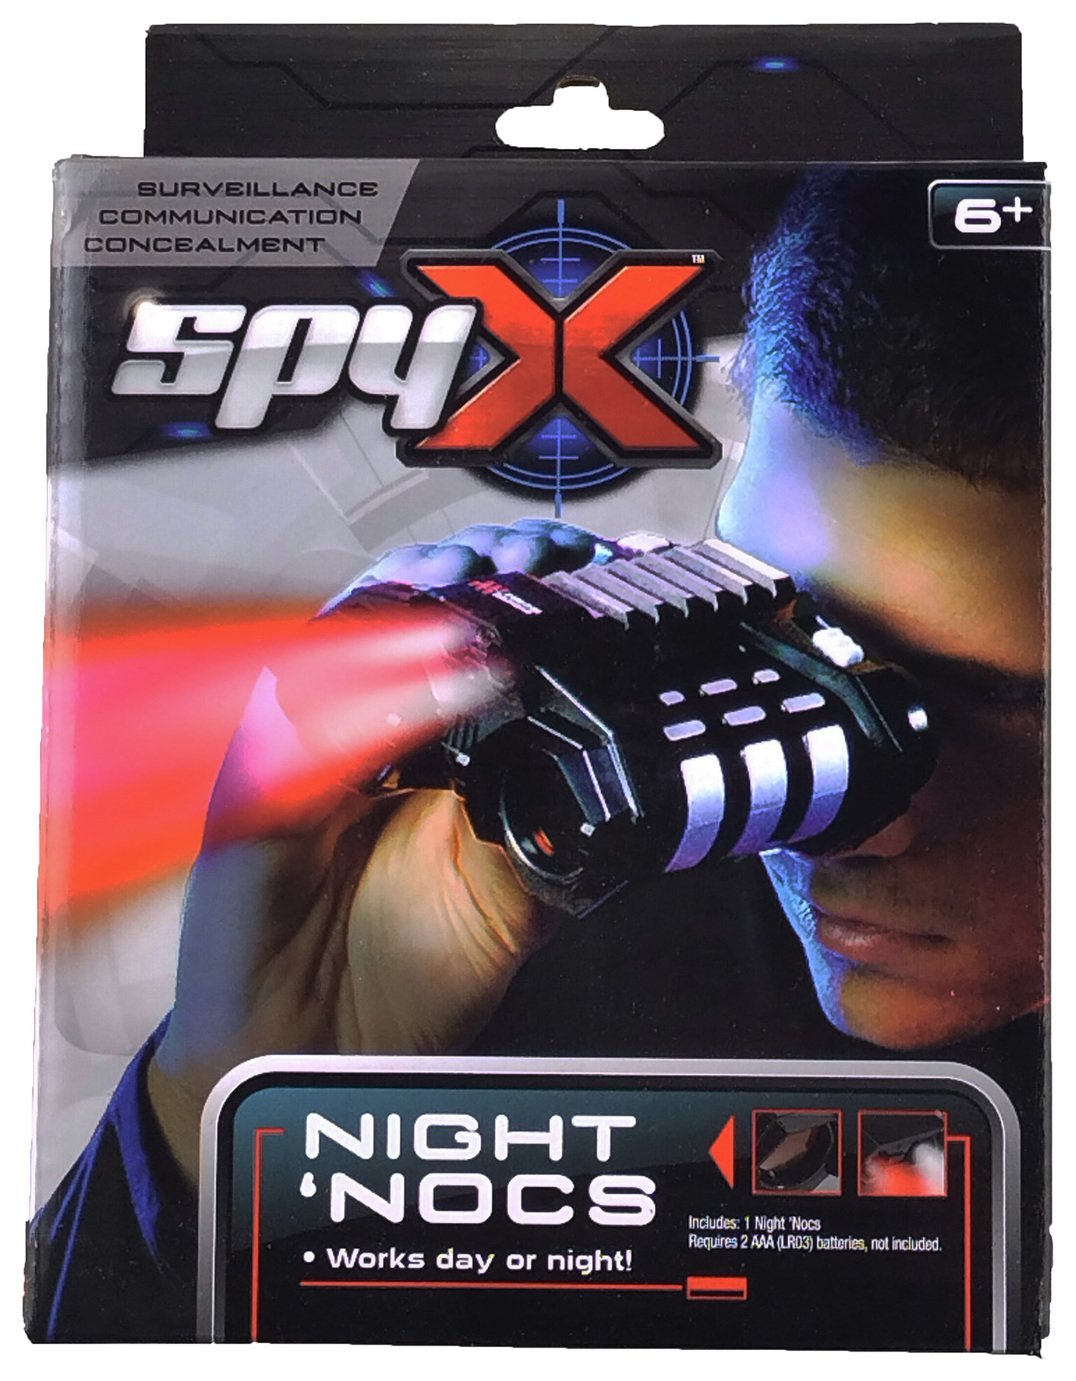 Spy X Night Nocs Binoculars Review